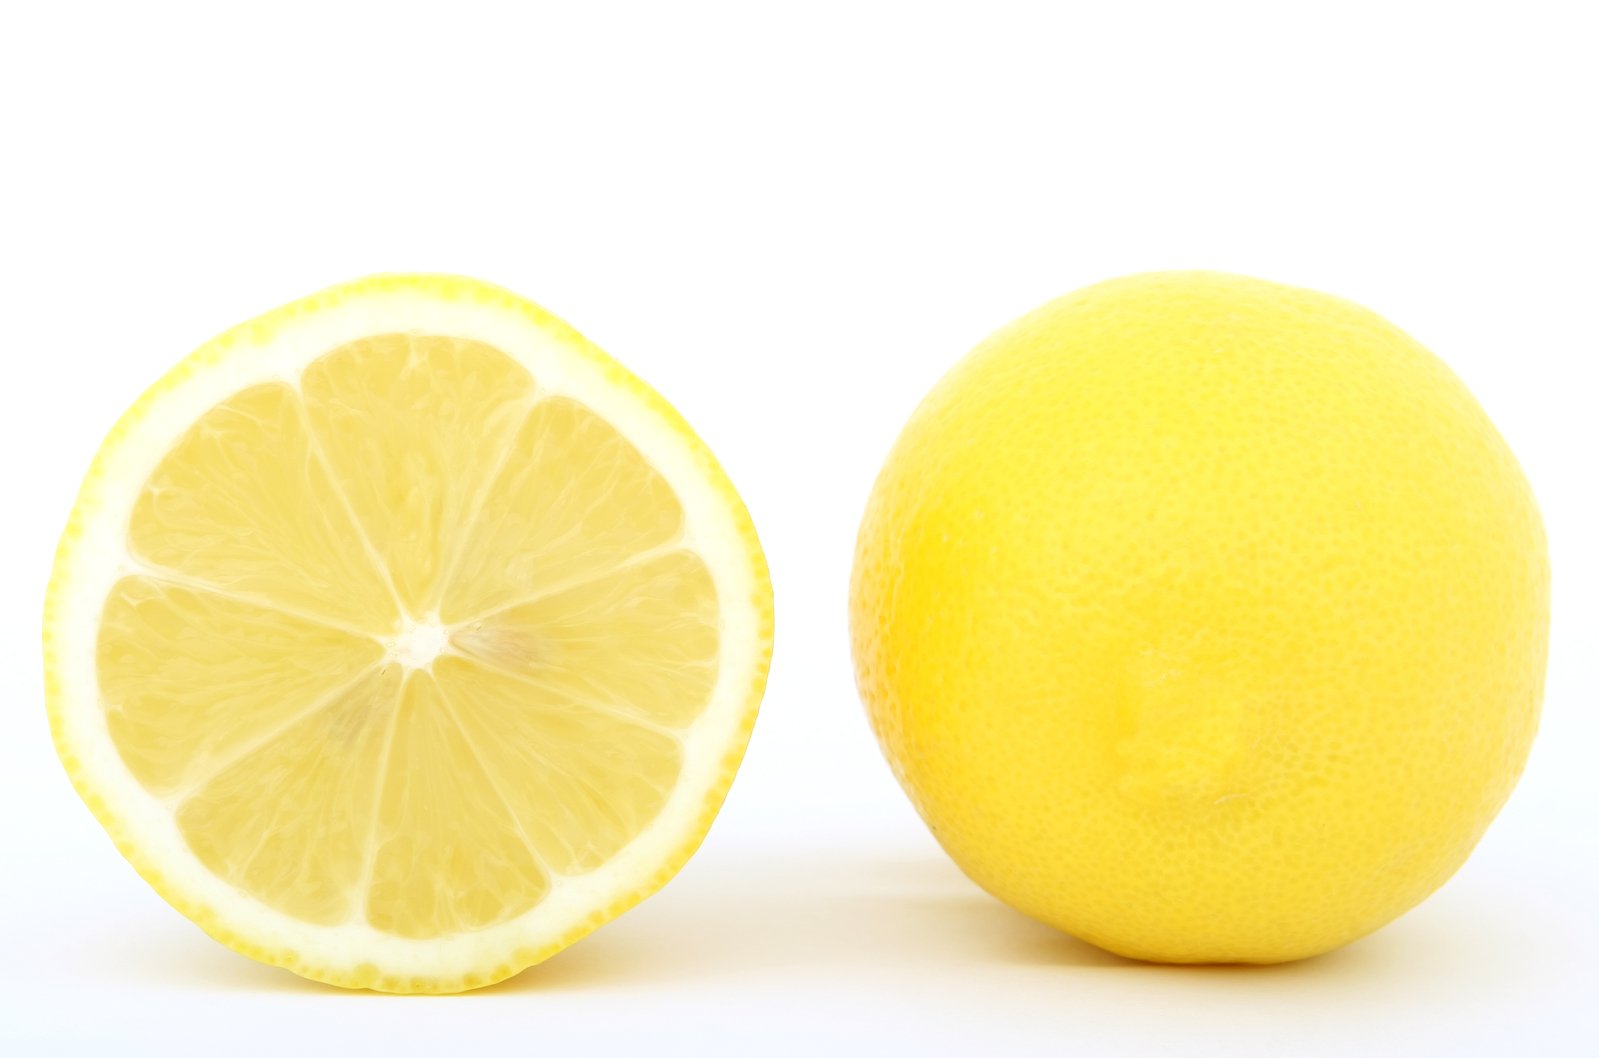 a half sliced lemon sits next to an orange